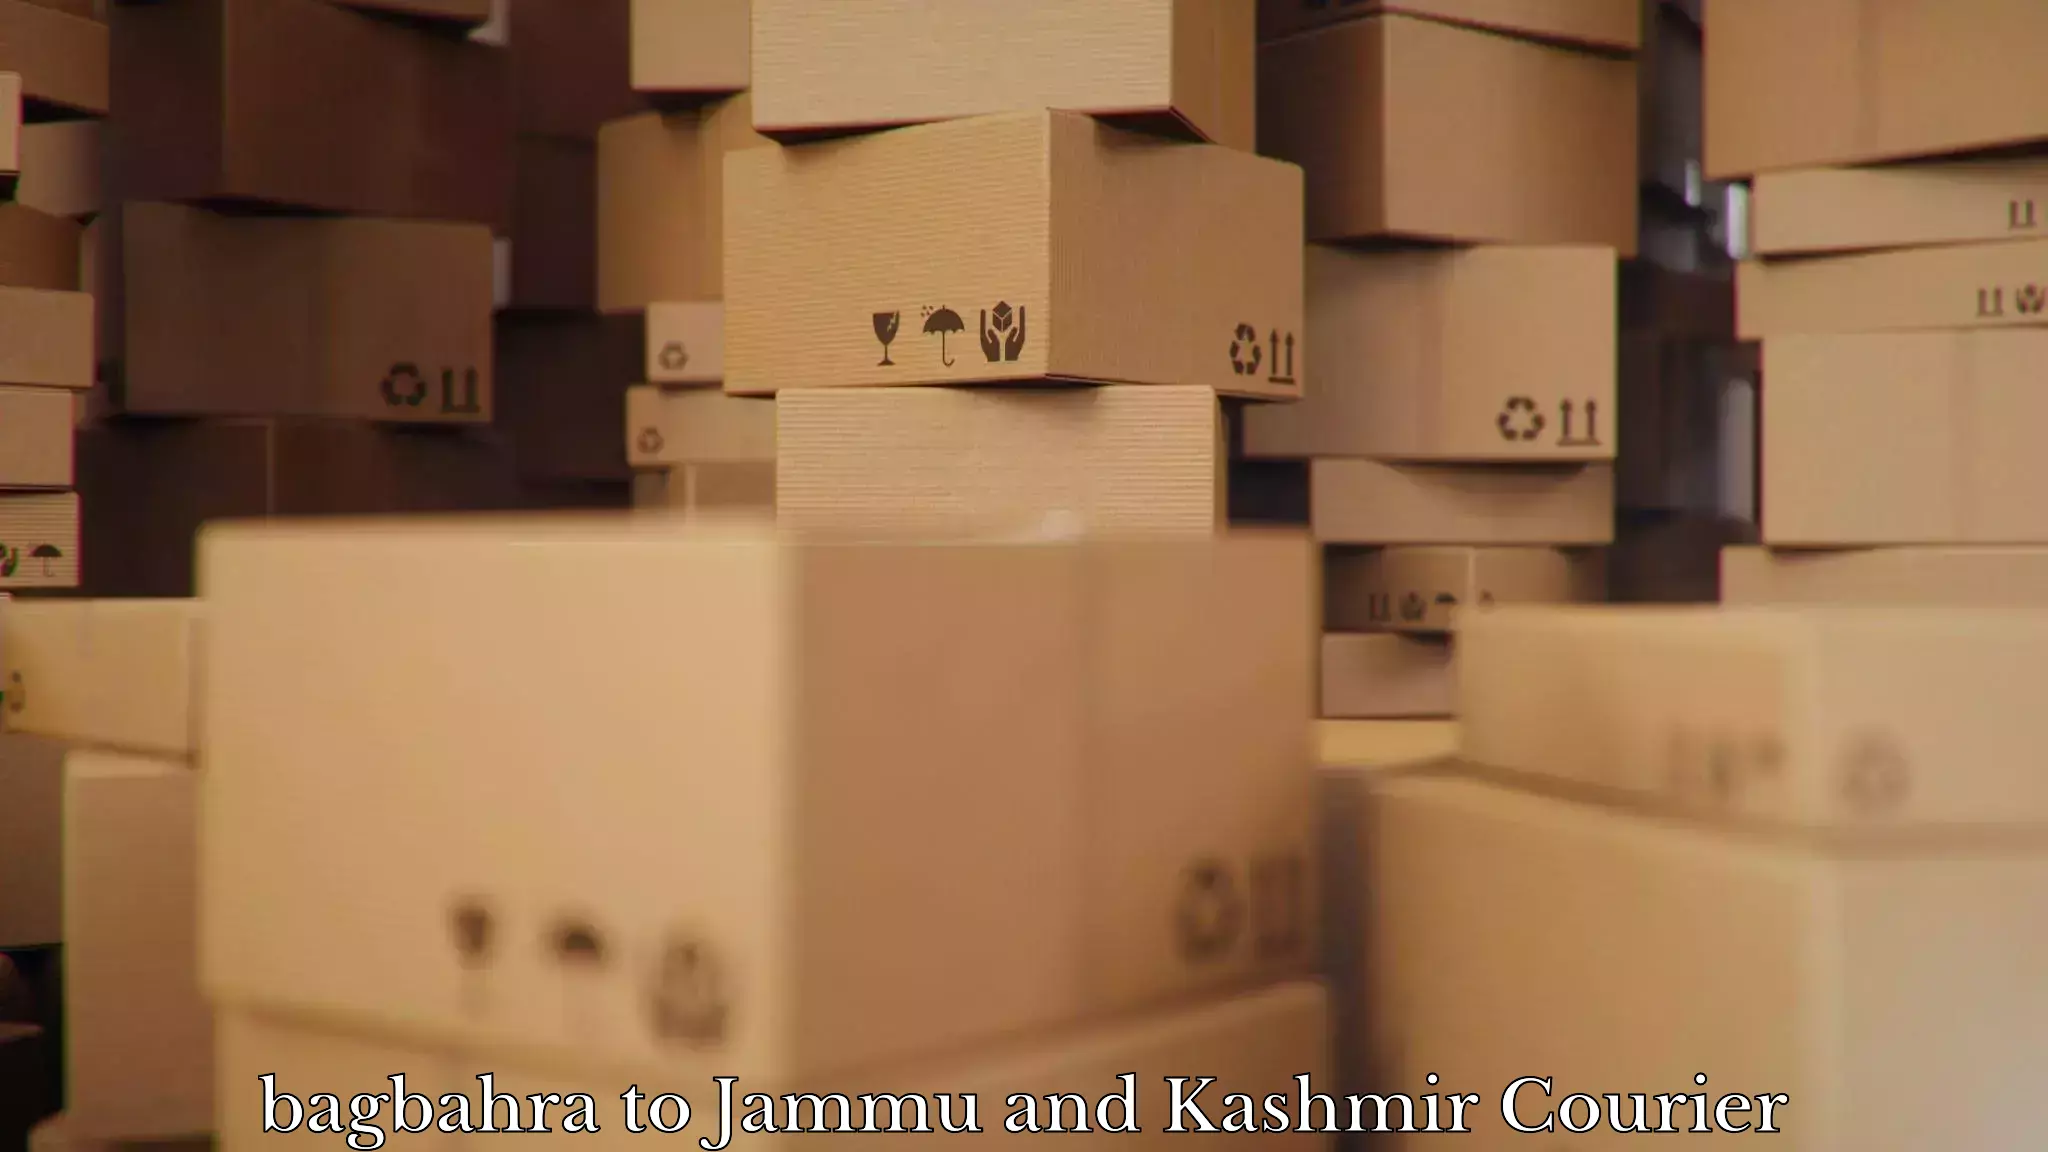 Professional packing services bagbahra to Srinagar Kashmir